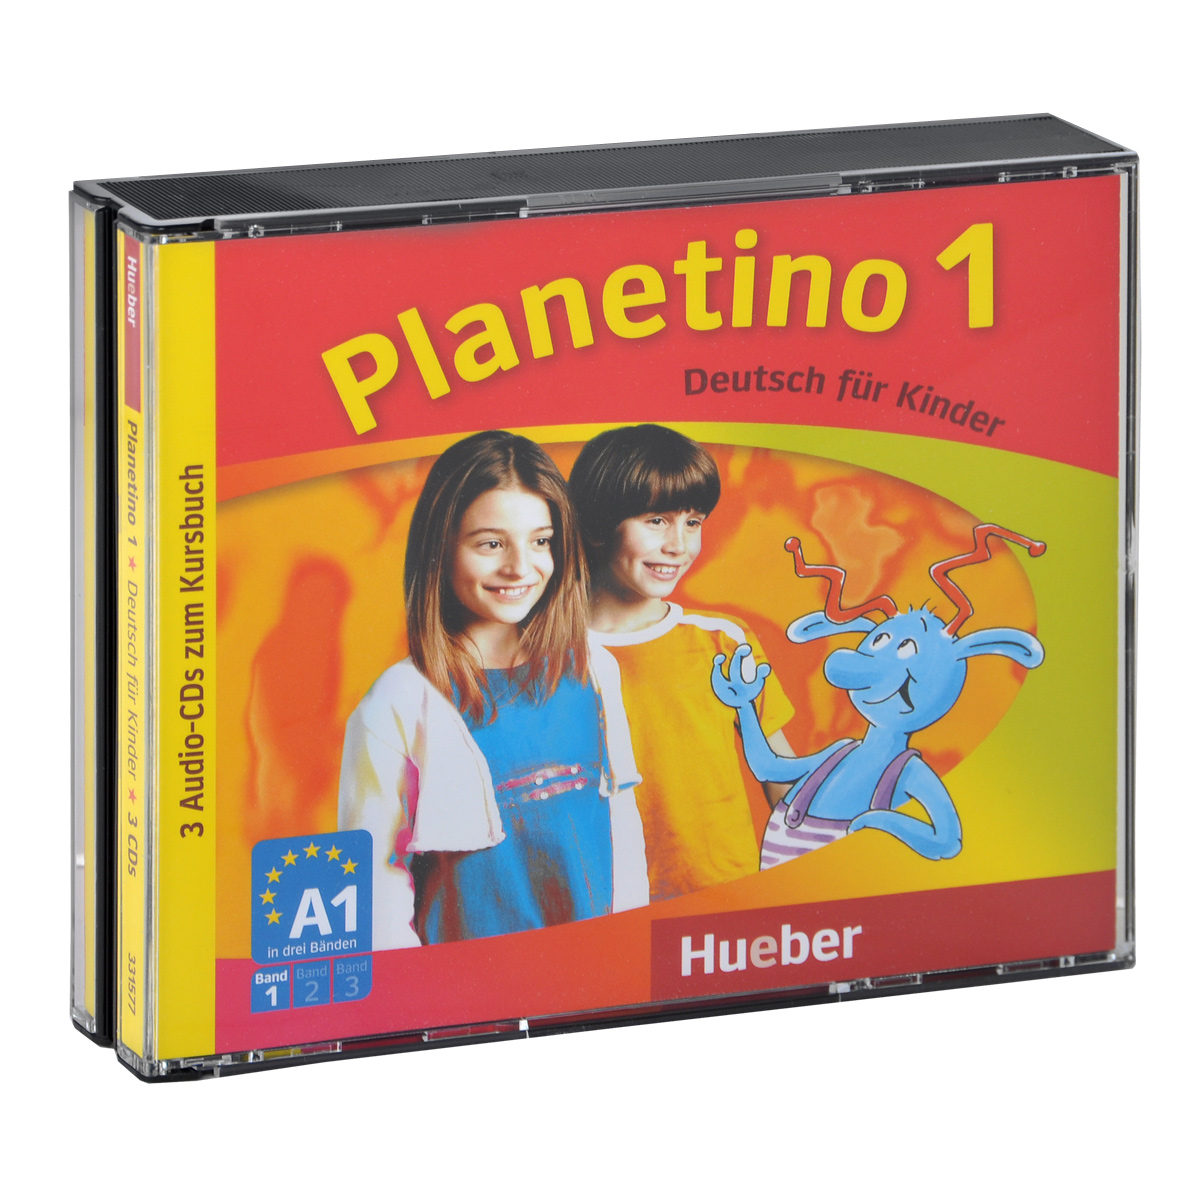 Planetino 1: Deutsch fur Kinder (аудиокурс на 3 CD)